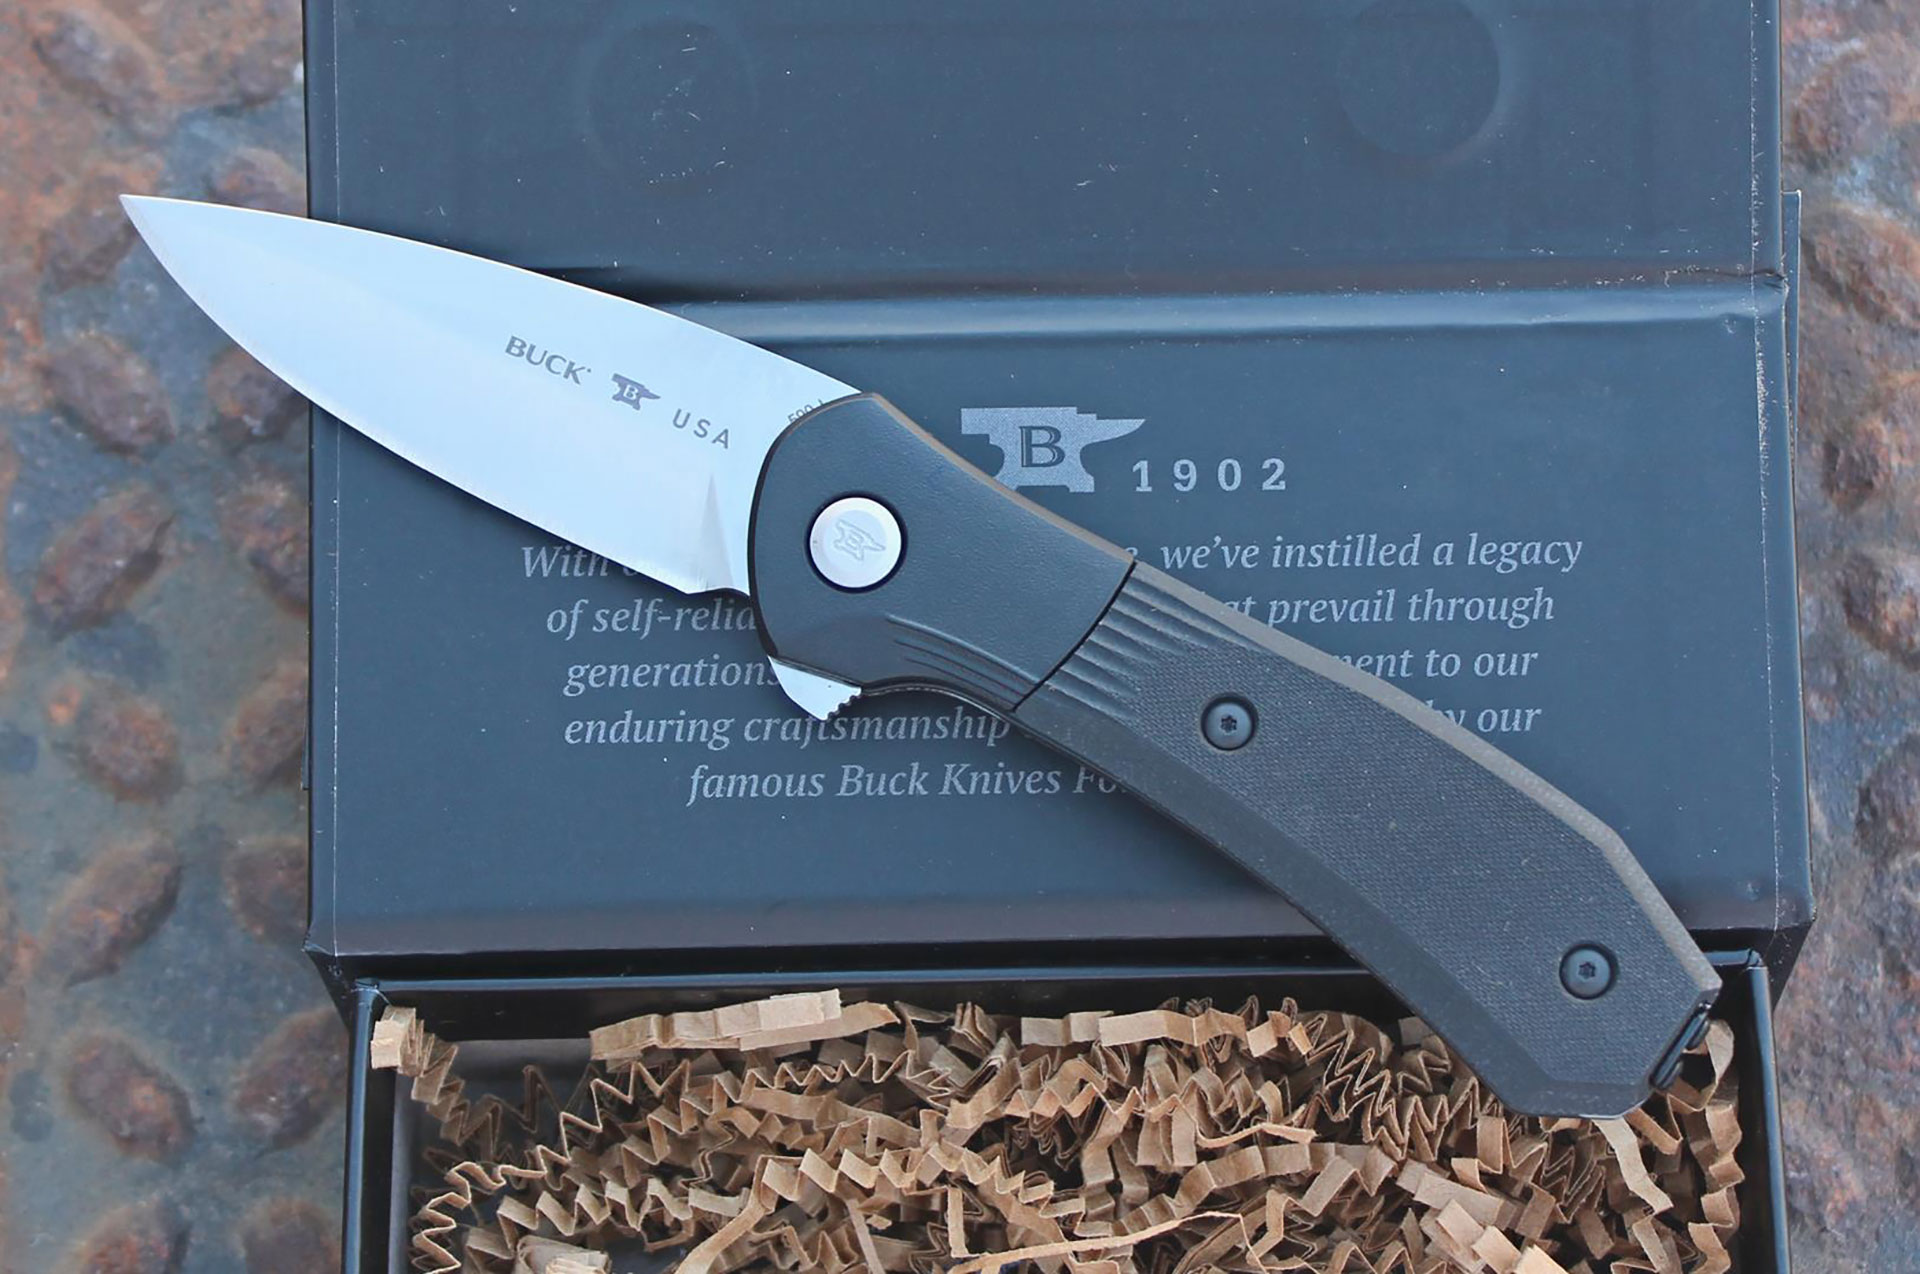 The Buck Knives Pr-level 590 Paradigm folding knife.